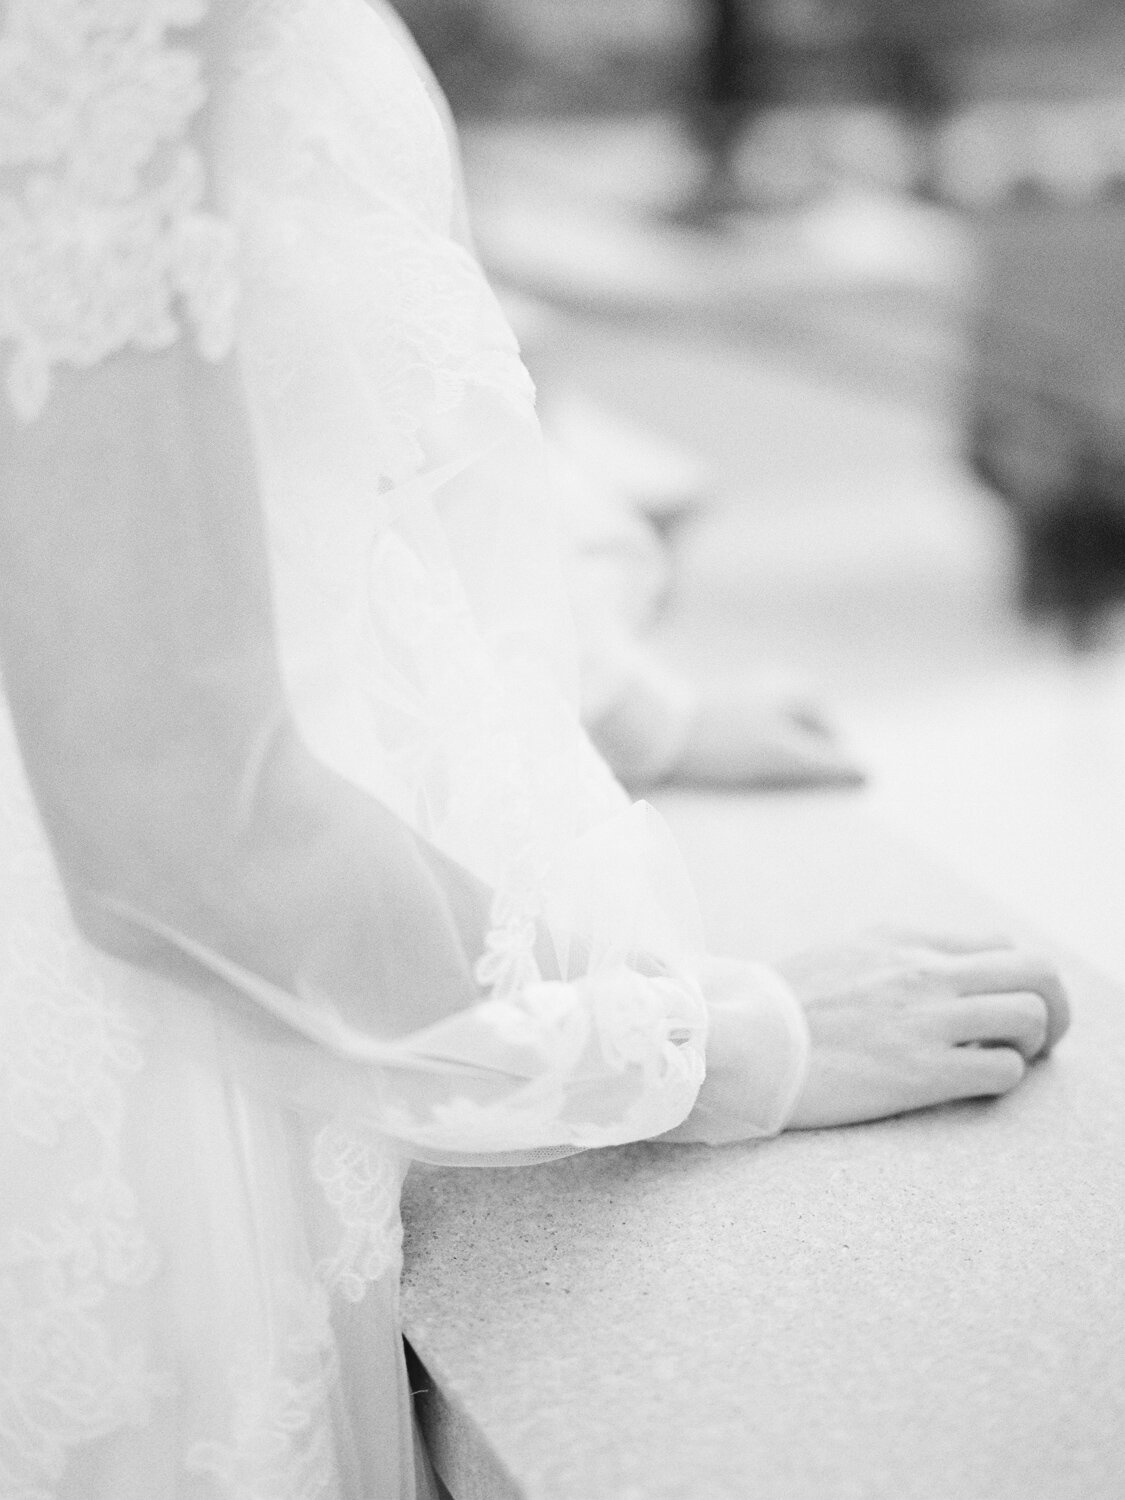 wedding dress sleeve detail